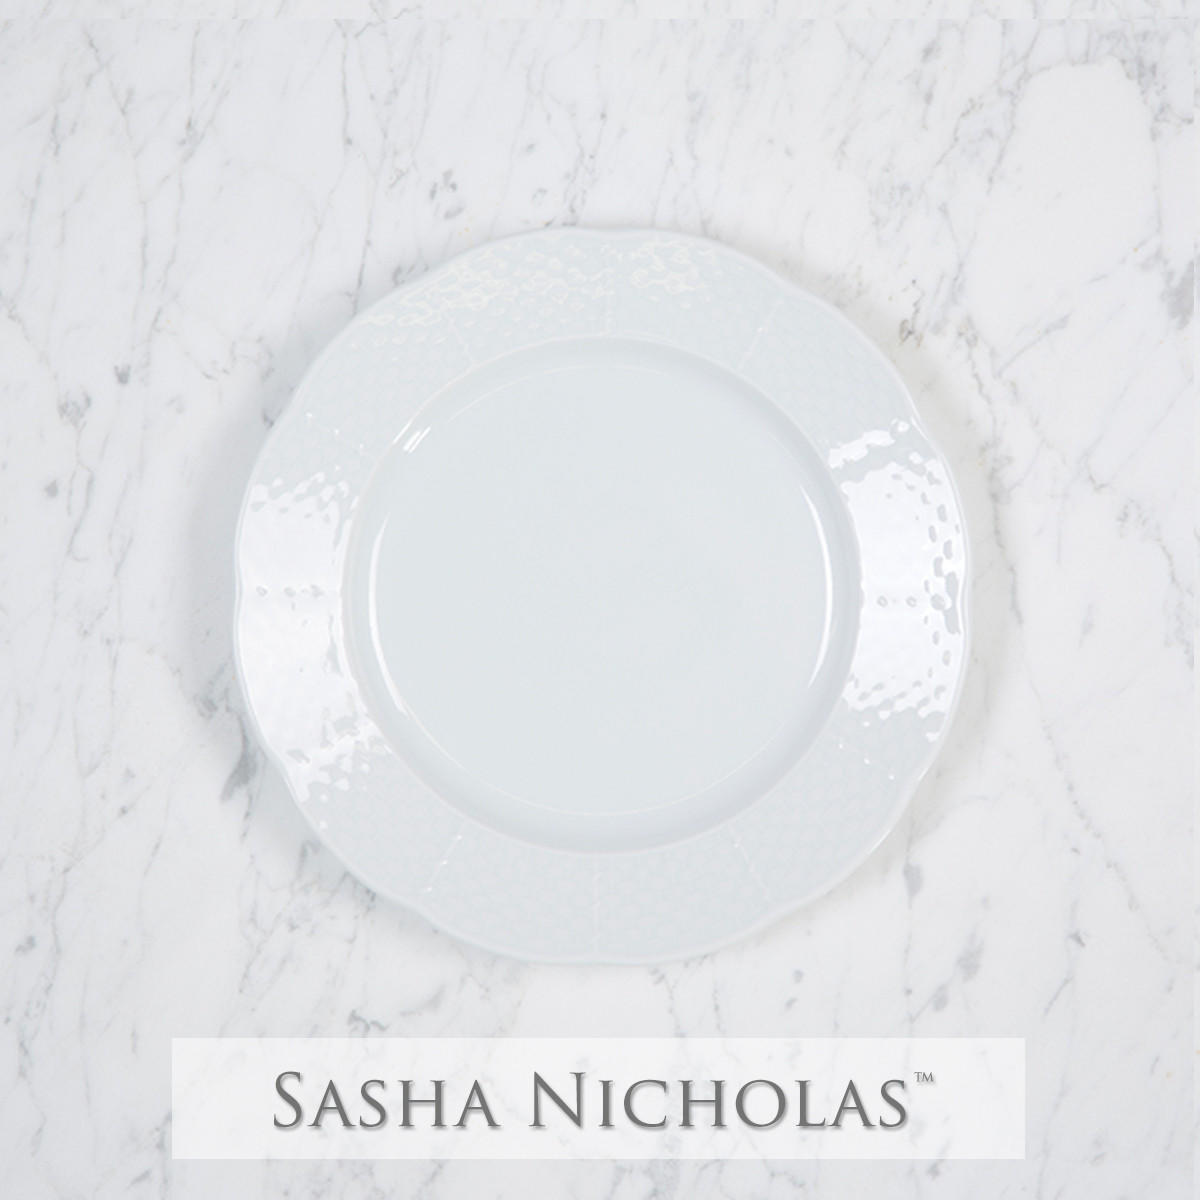 Weave Salad Plate, SNW111, Sasha Nicholas